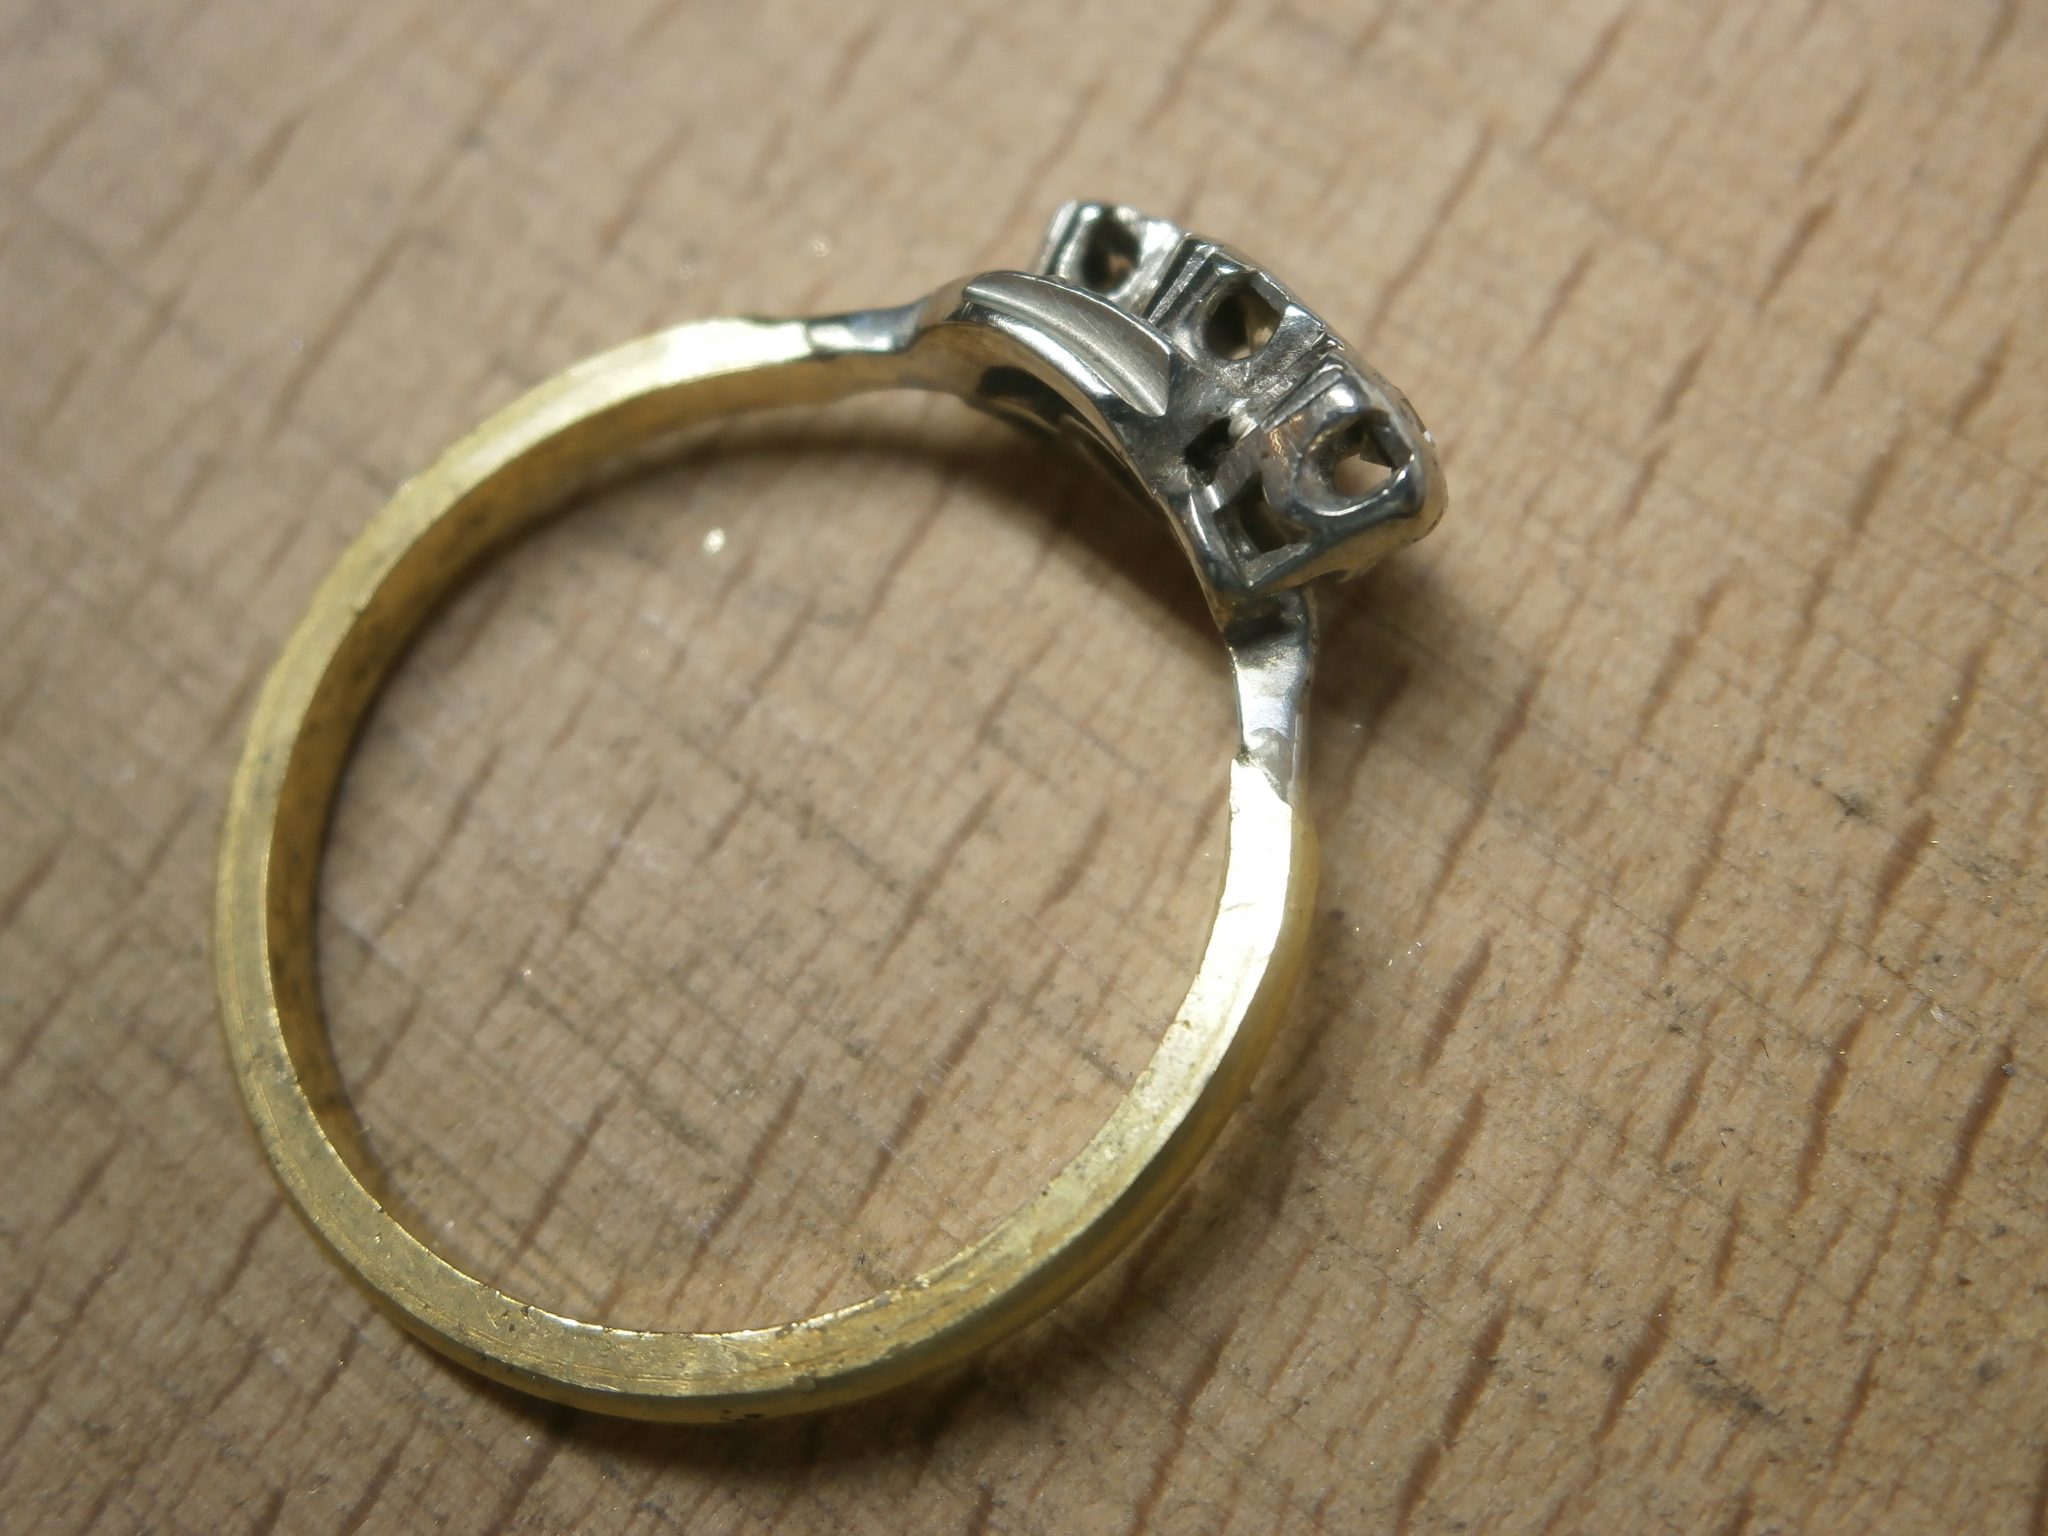 Ring refurbishment - almost a perfect fit